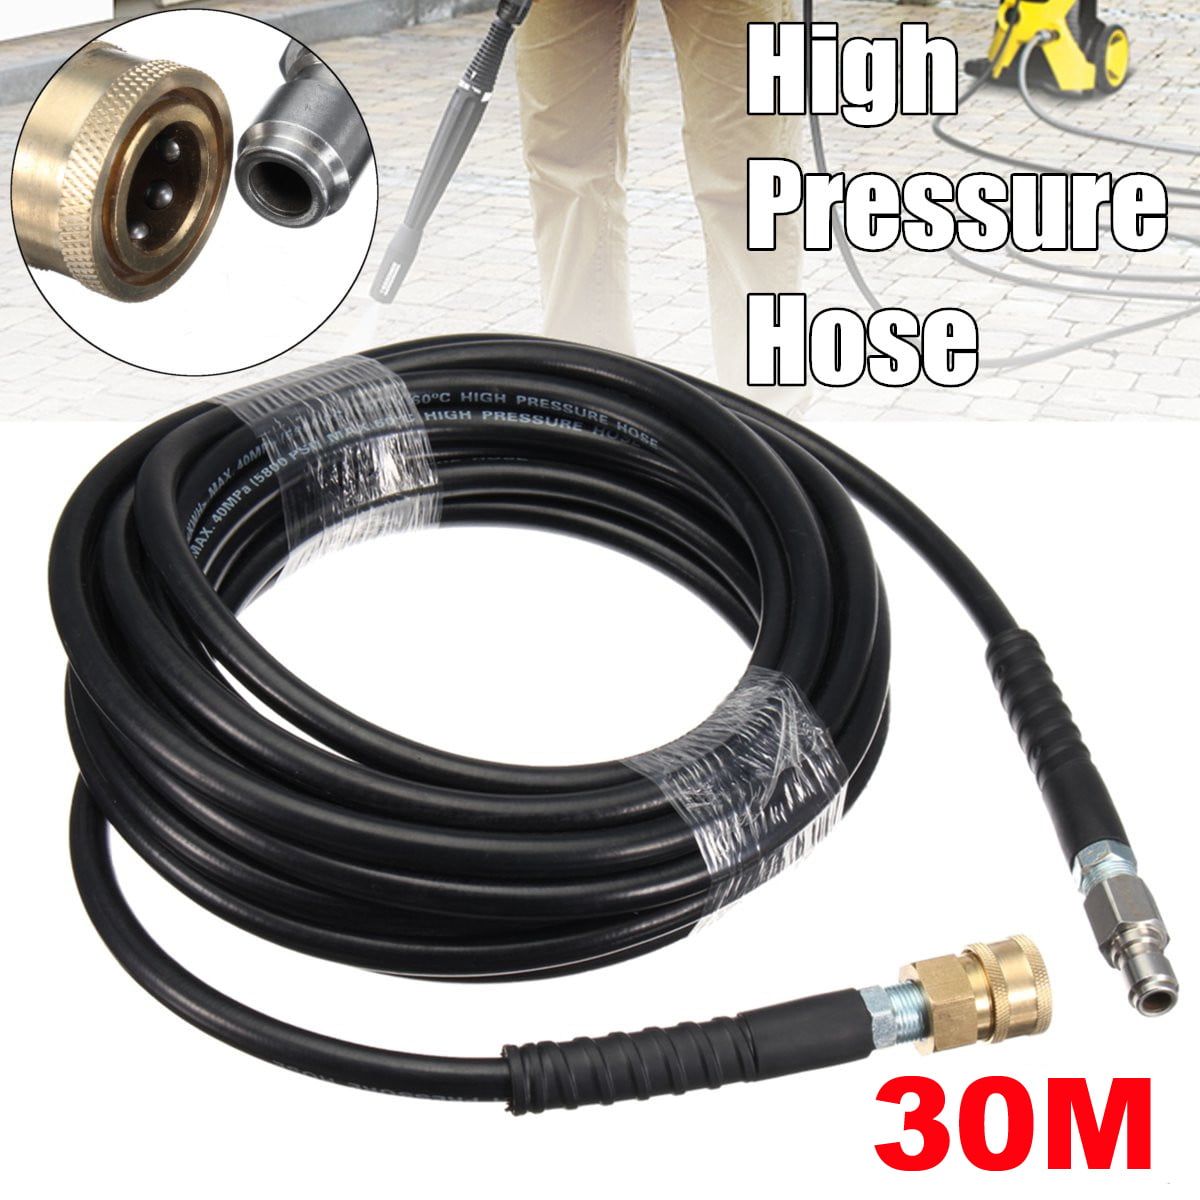 0-40 PSI Reg 48" high pressure hose 